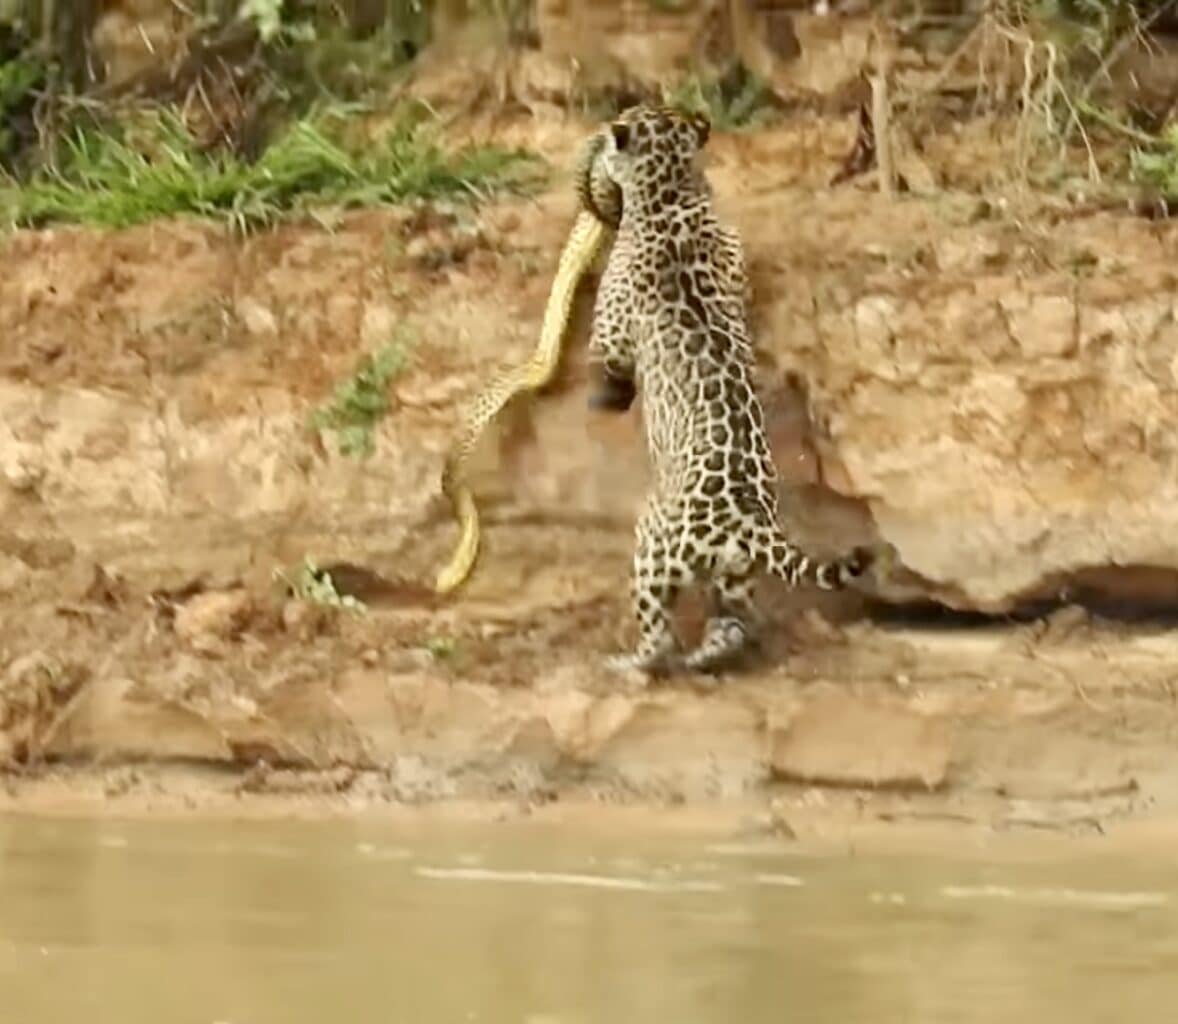 Leopard attacking anaconda